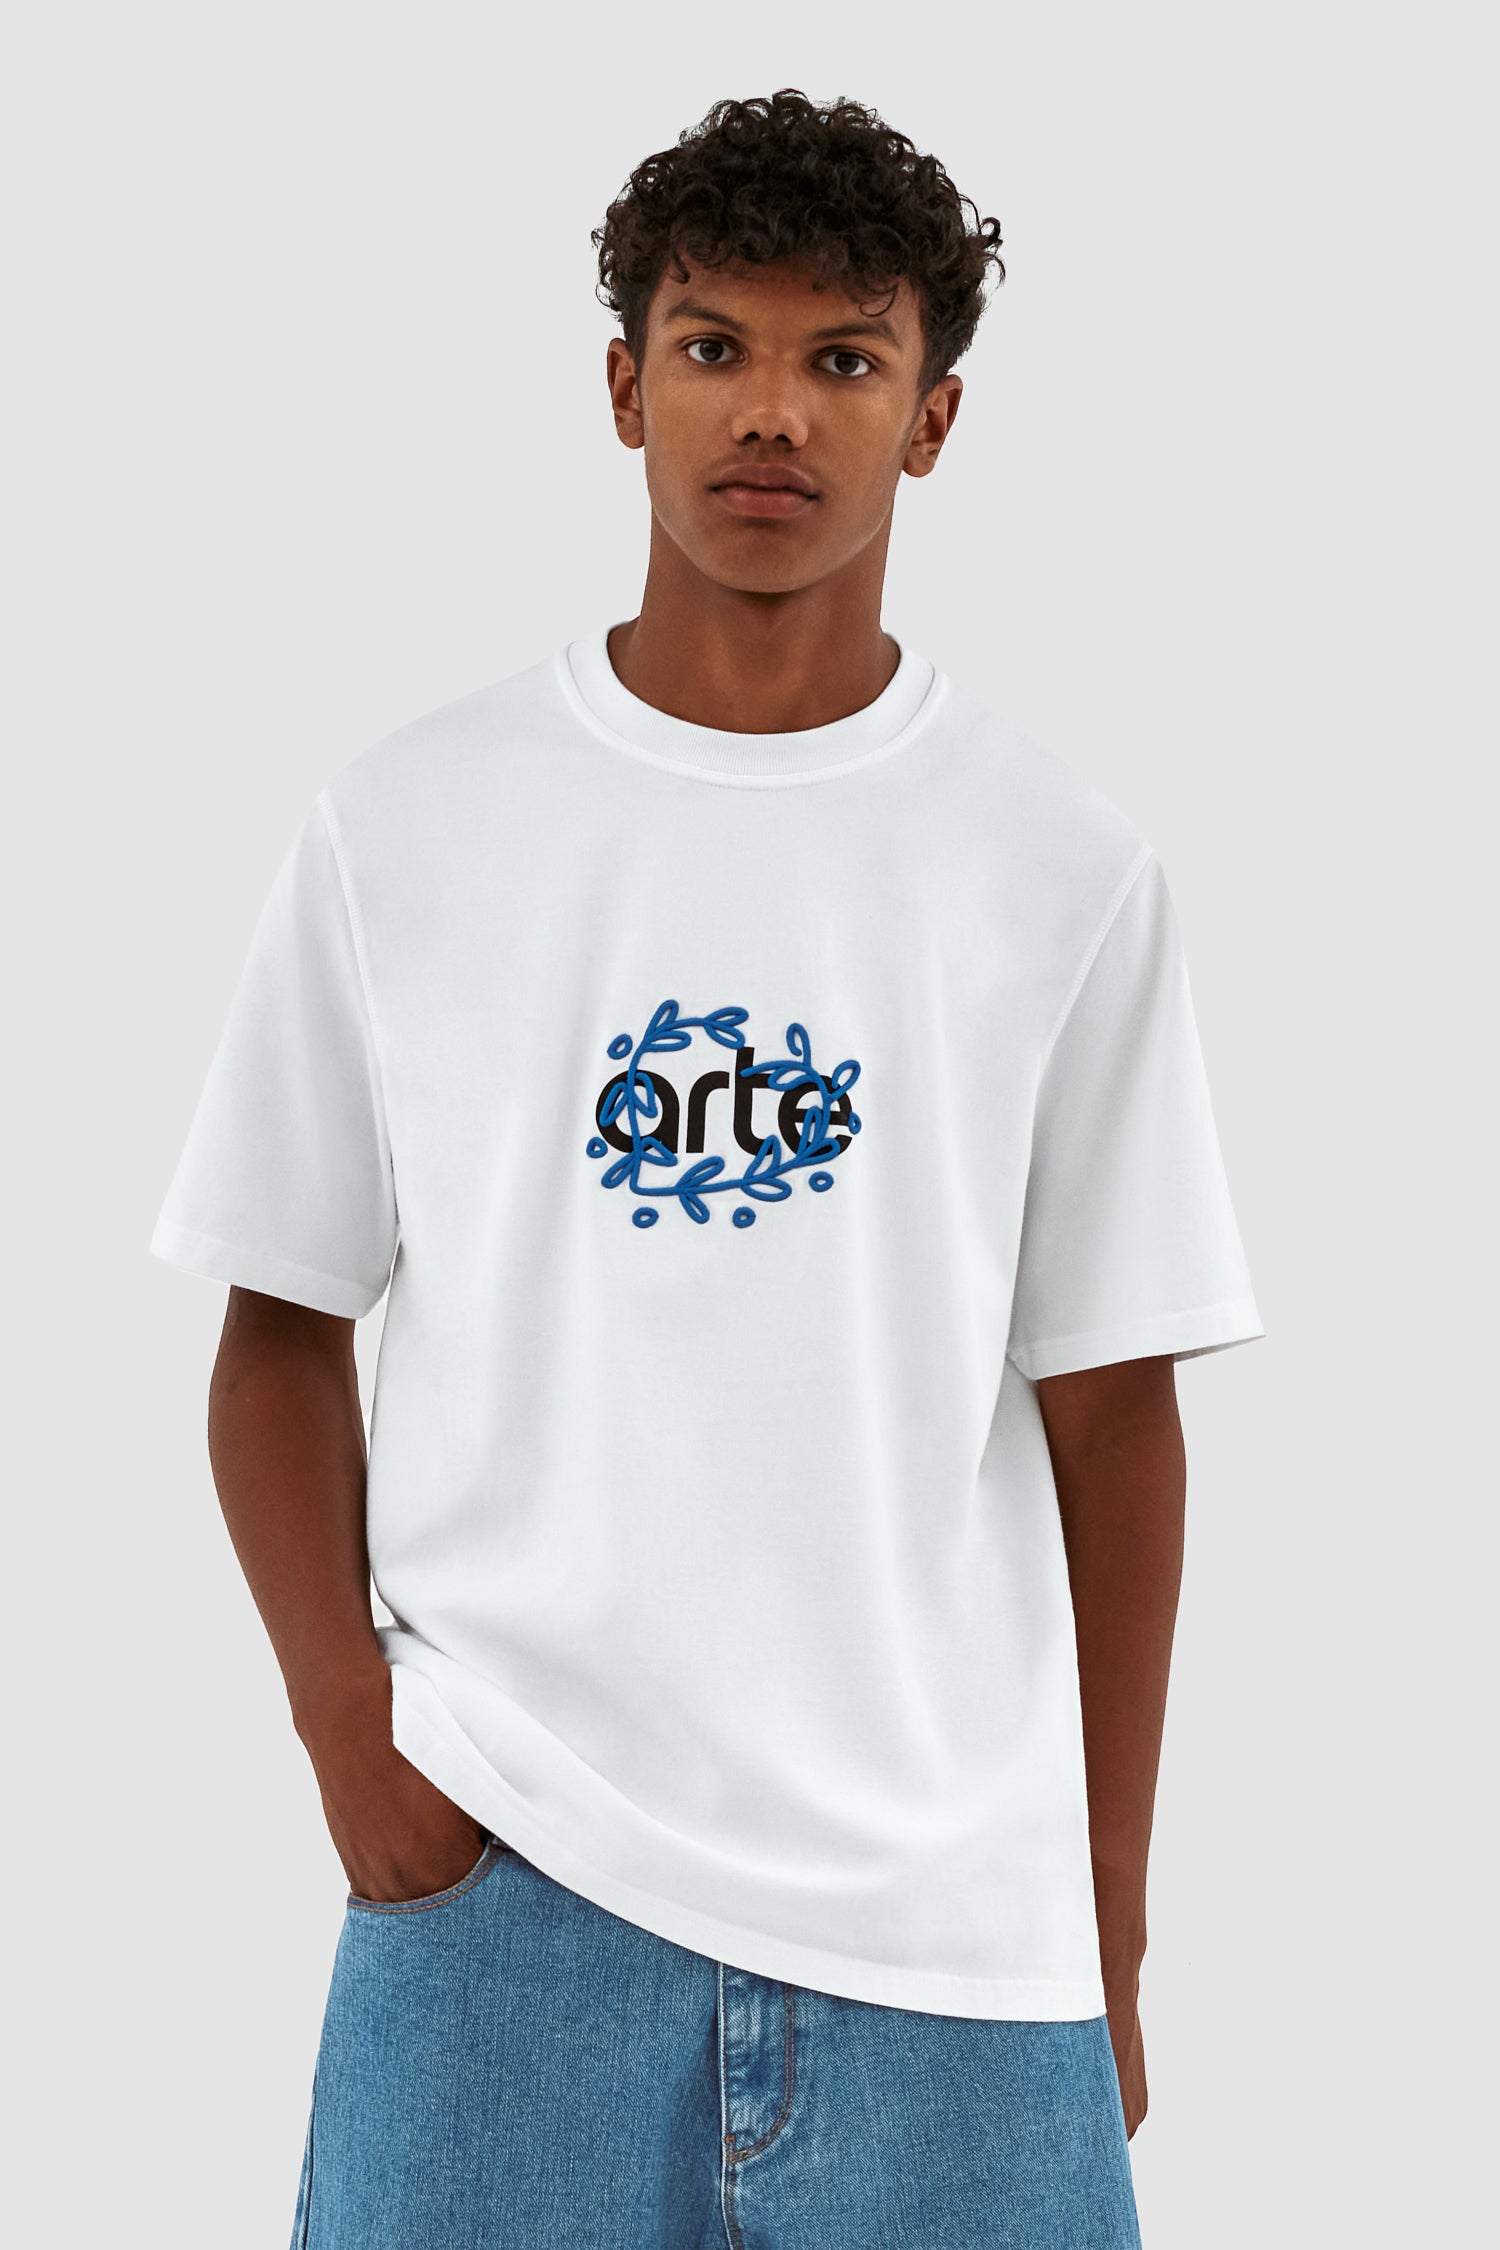 Teo Arte Front T-shirt - White